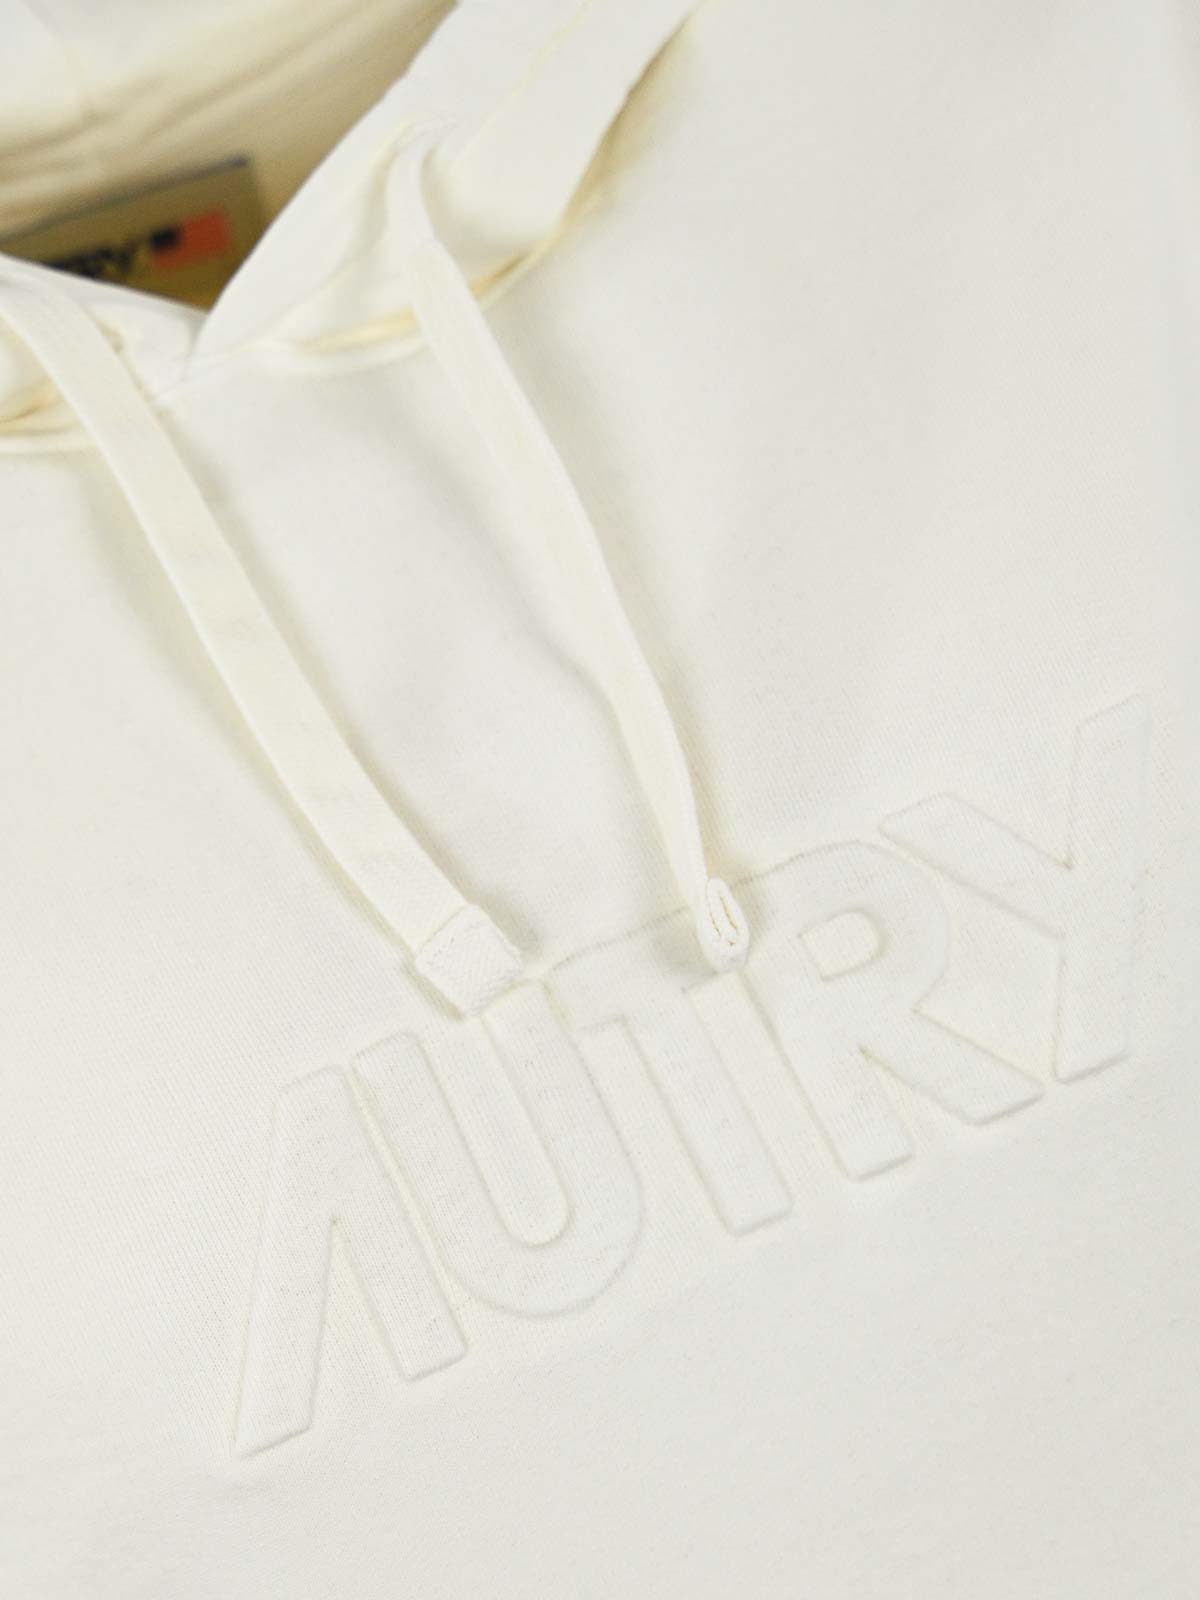 Shop Autry Sweatshirt With Logo In White